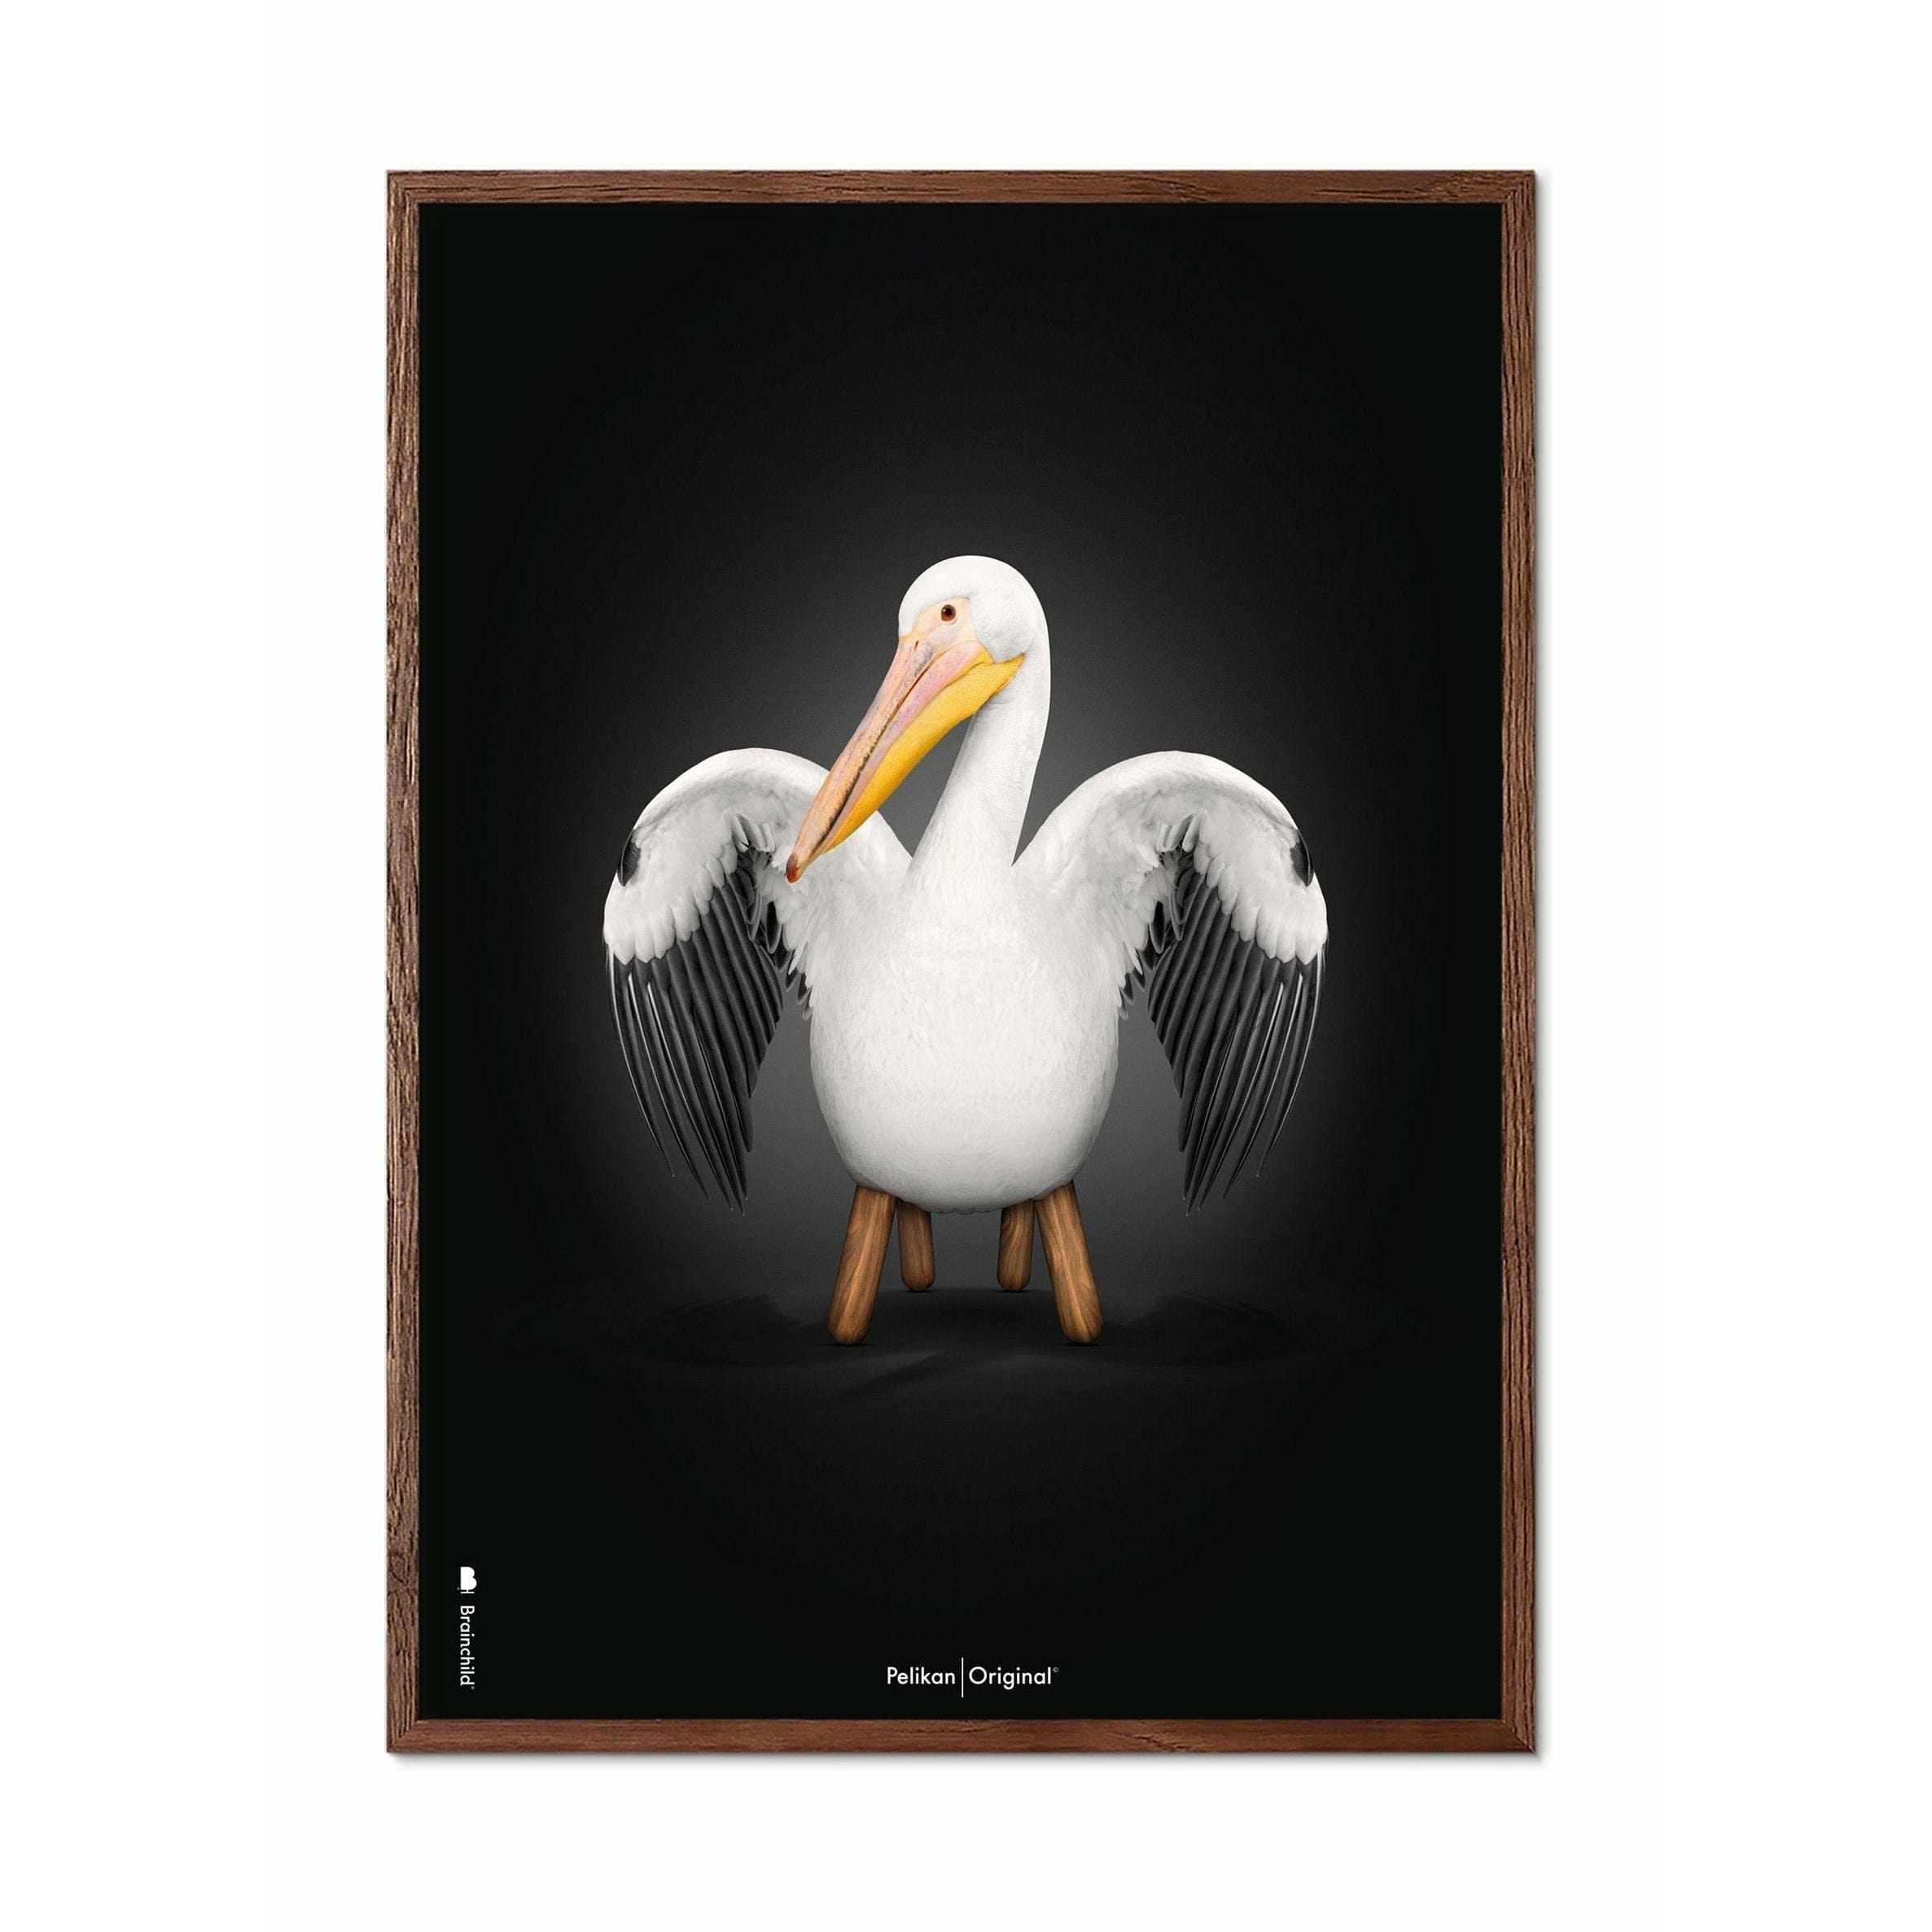 Brainchild Pelikan Classic Poster, Dark Wood Frame 50x70 Cm, Black Background